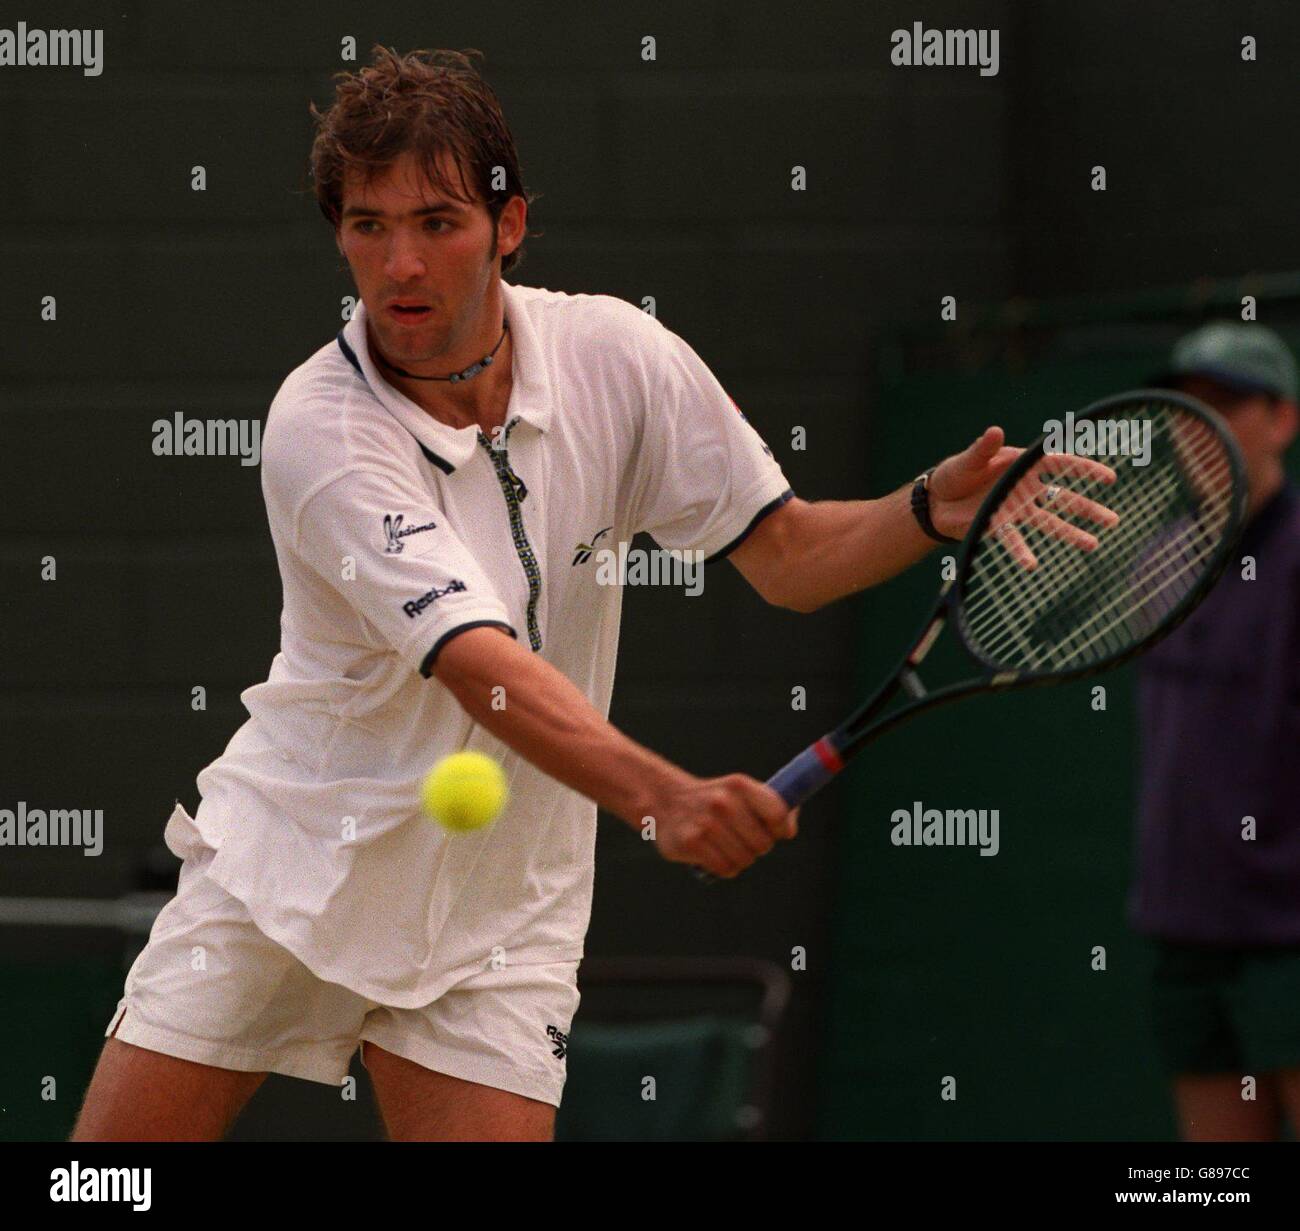 Wimbledon, Daniel Elsner v Adrian Barnes Stock Photo - Alamy